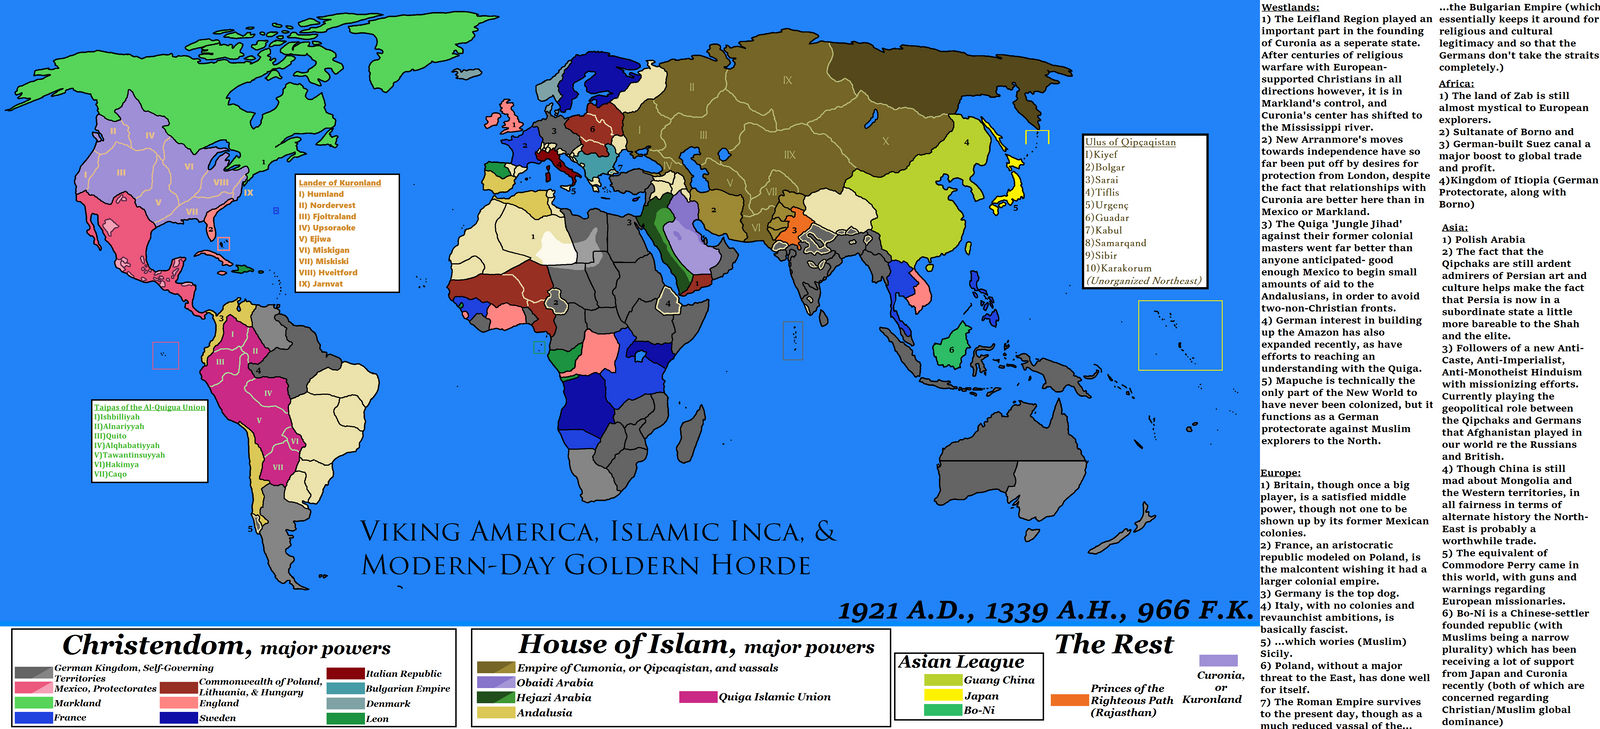 viking_america__islamic_inca__and_the_horde_by_goliath_maps_dd70pbk-fullview.jpg